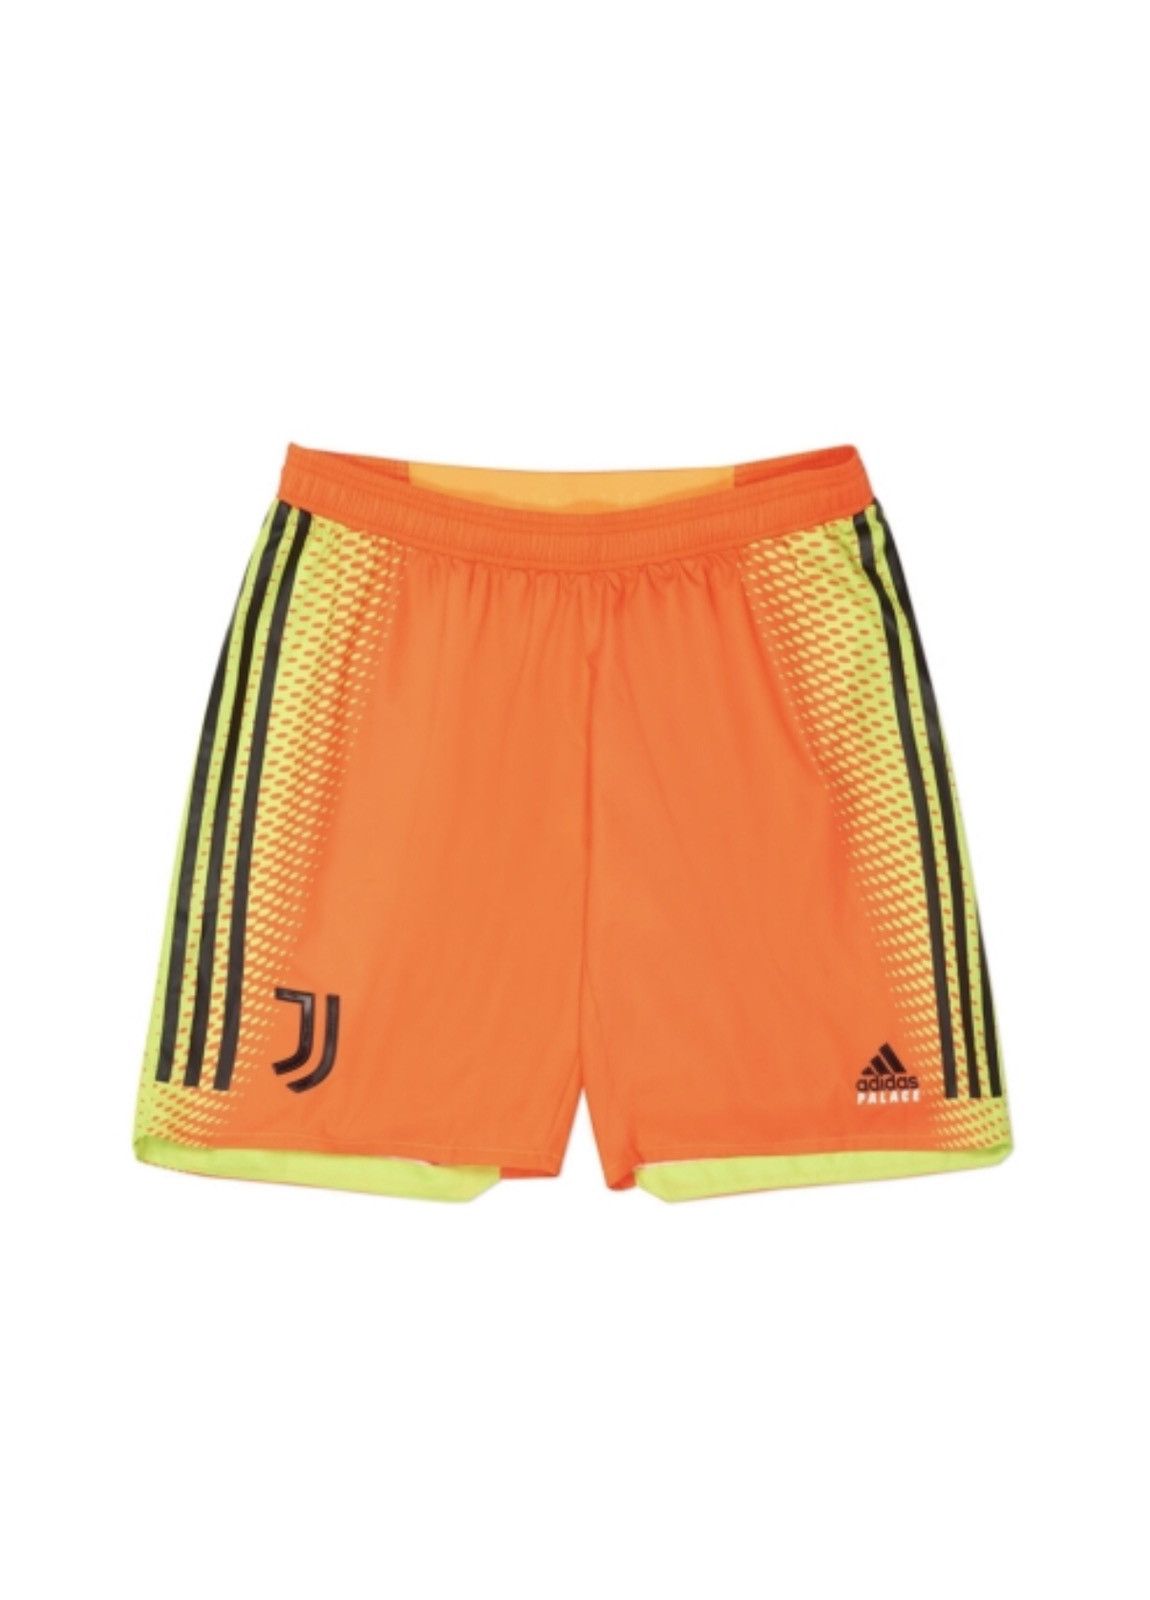 Adidas Palace x Juventus football Shorts Size US 28 / EU 44 - 1 Preview